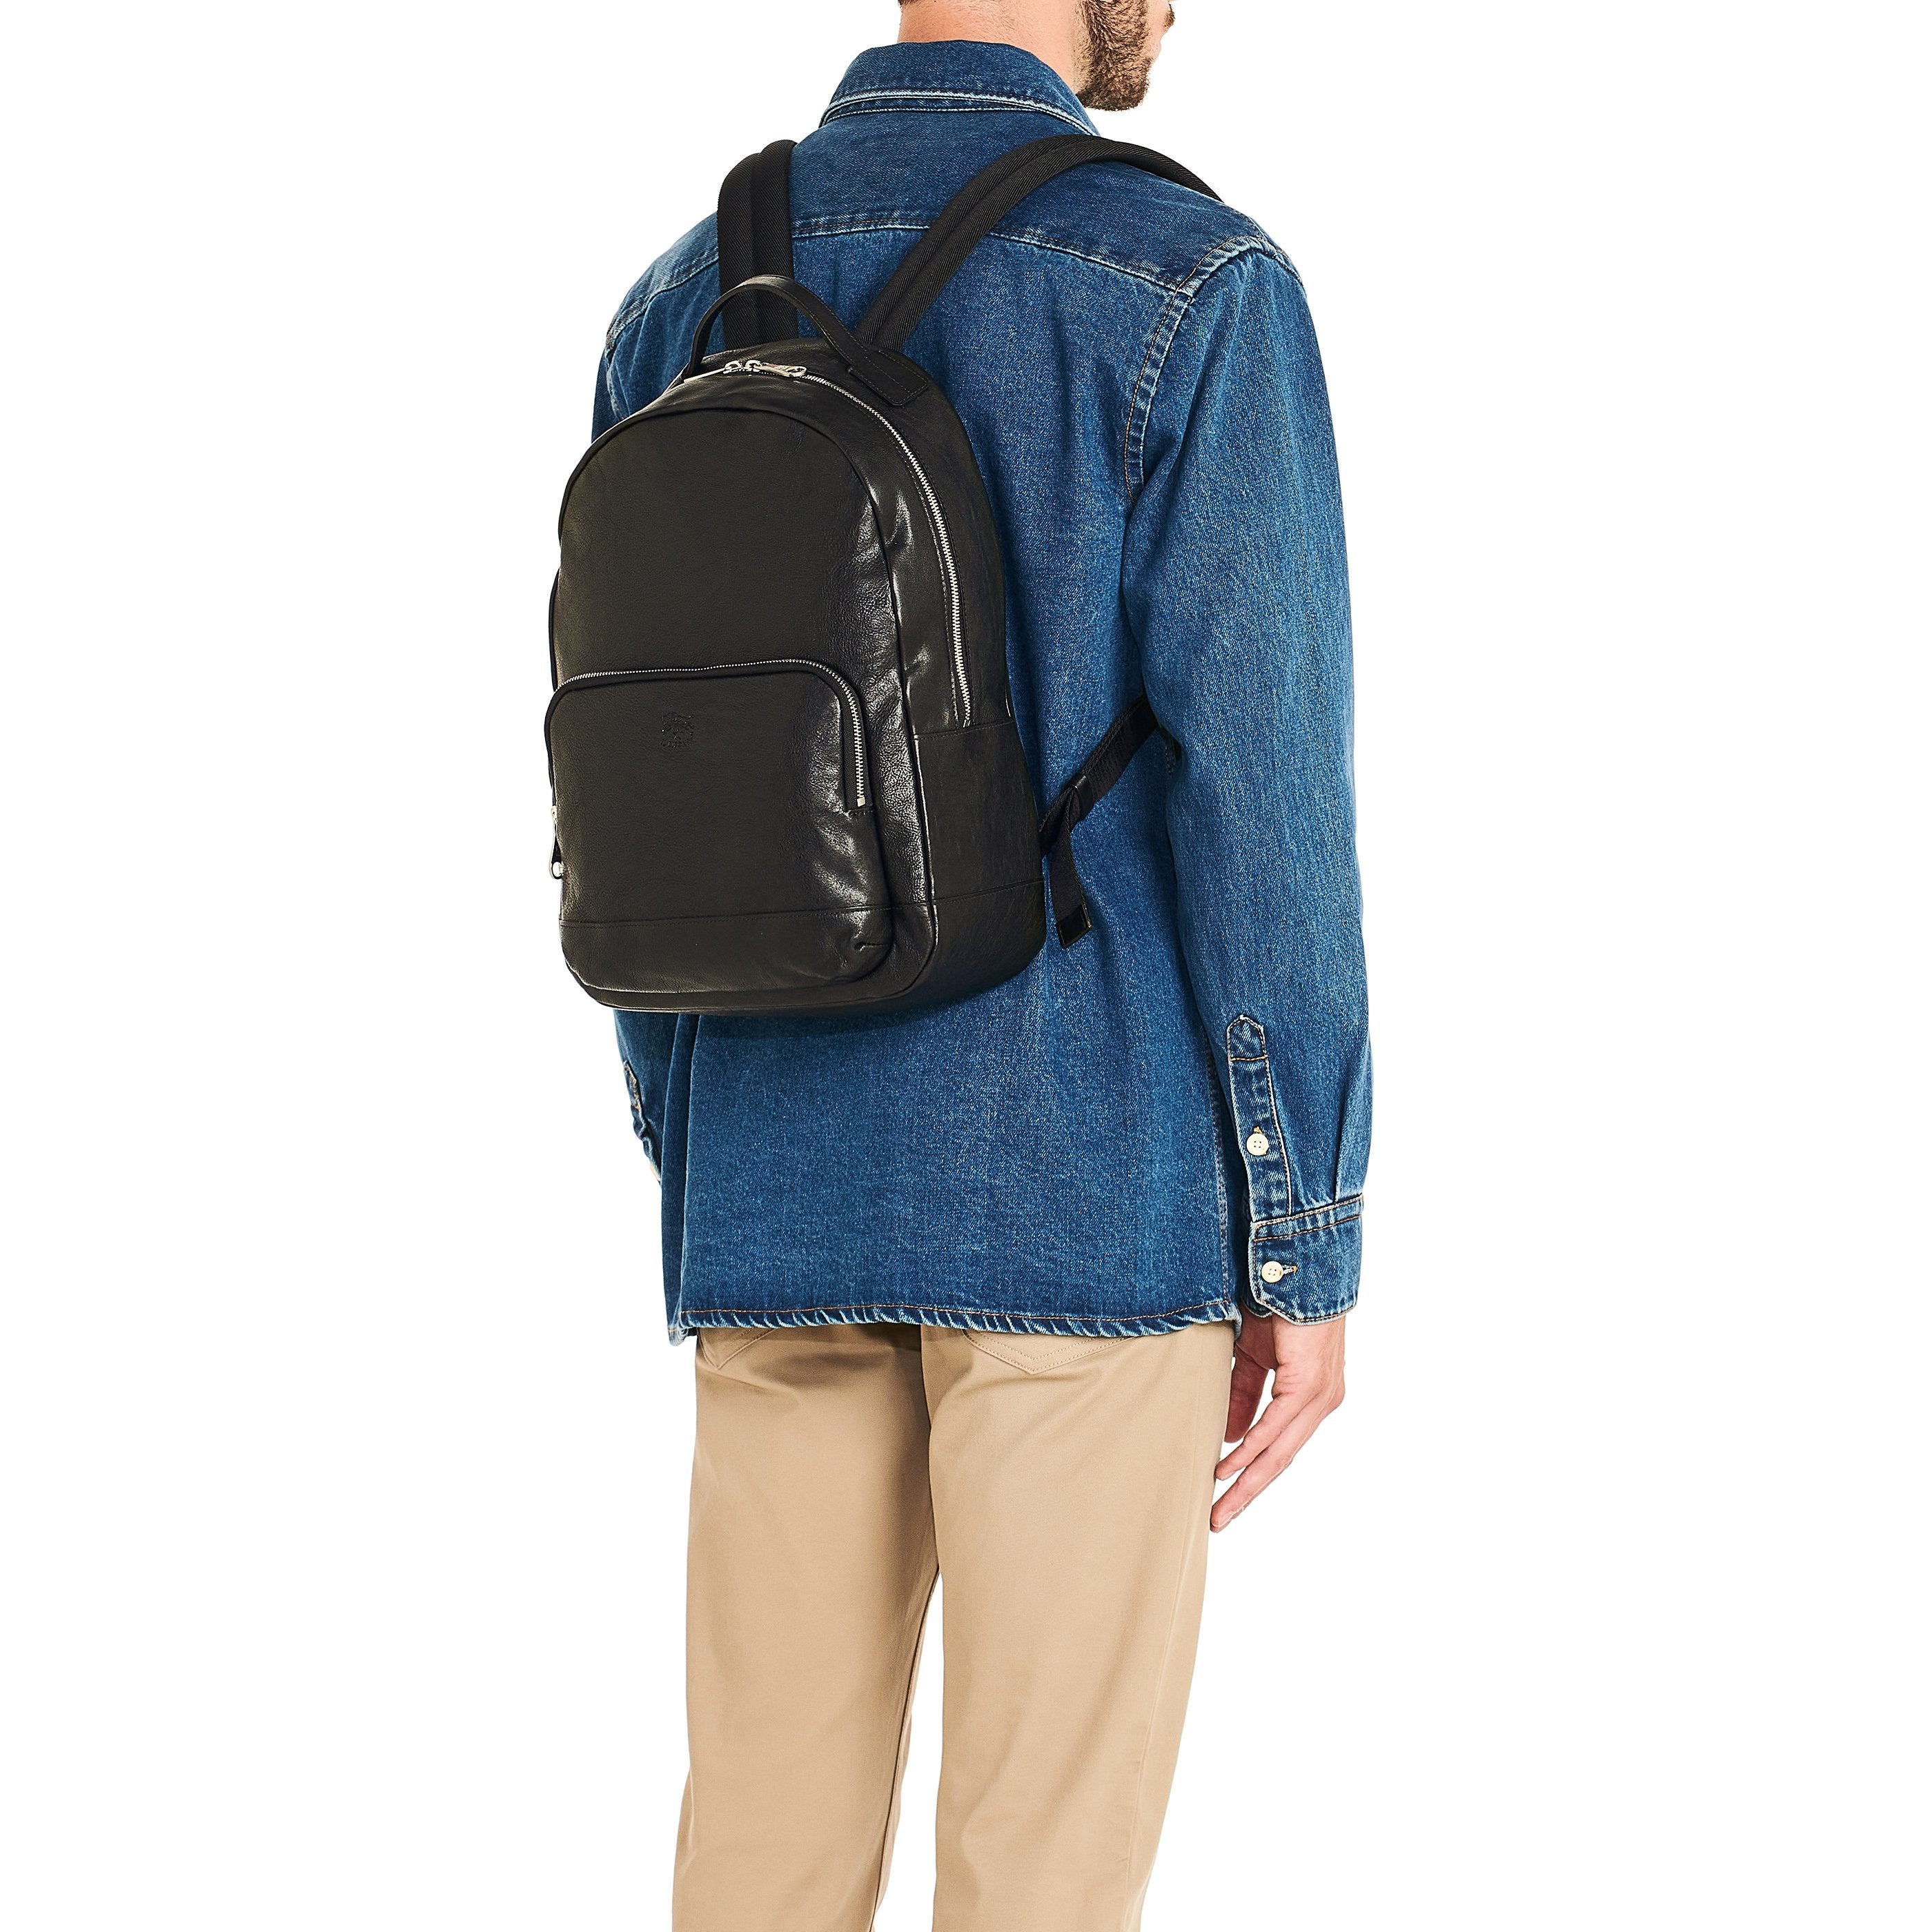 Meleto | Men's backpack in leather color black